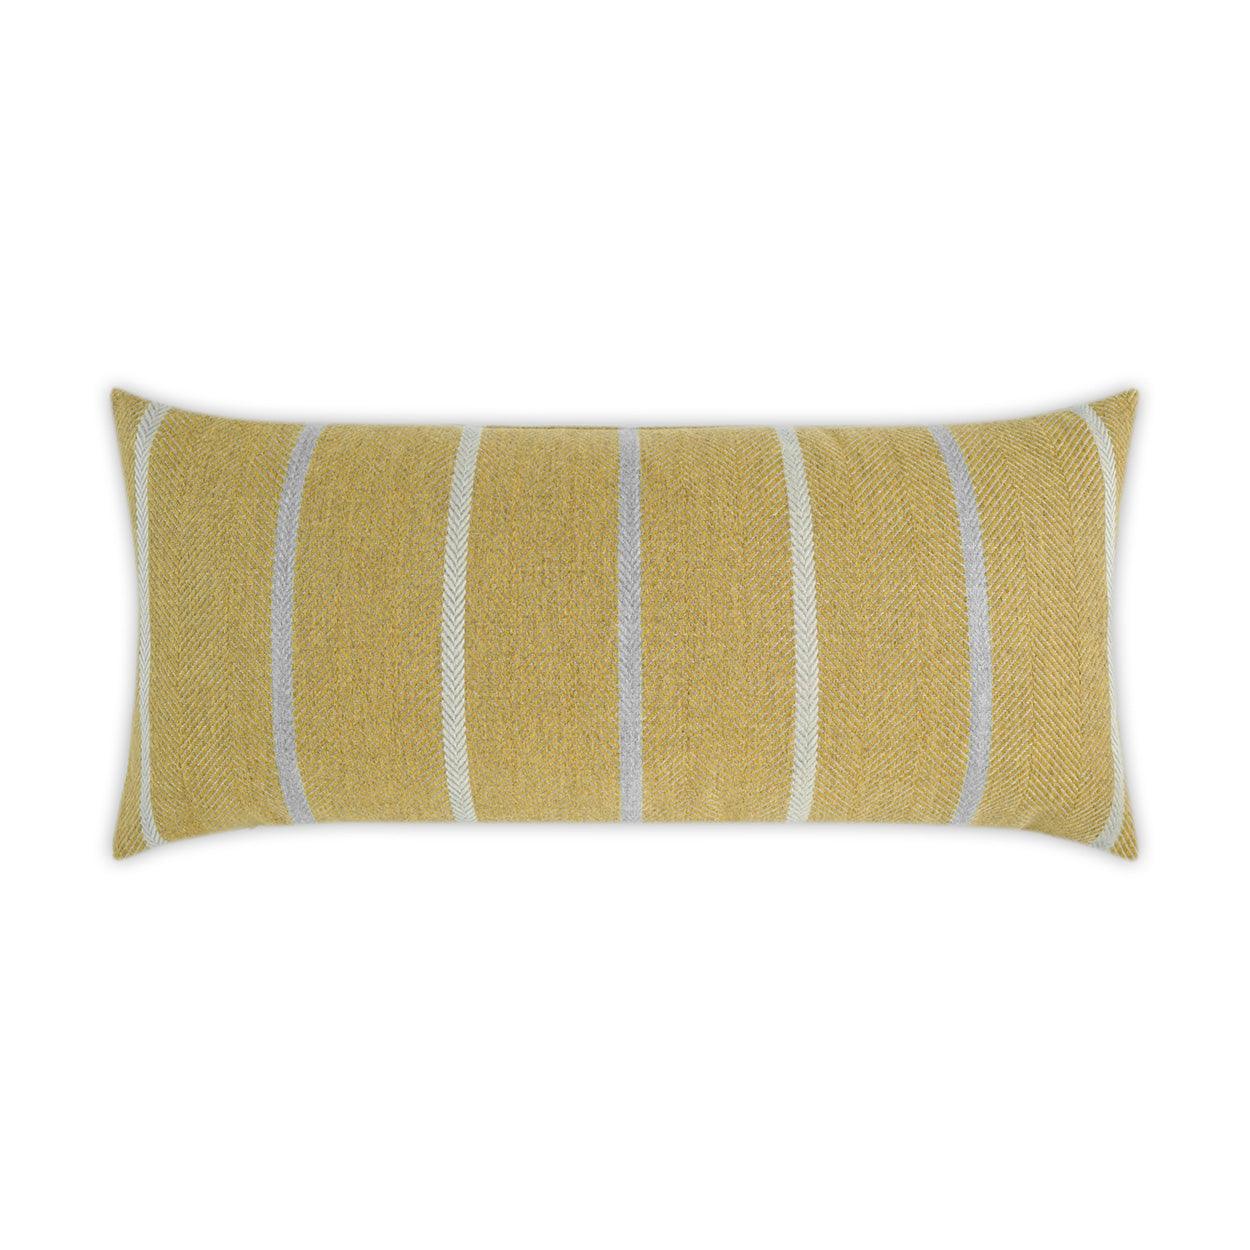 LOOMLAN Outdoor - Outdoor Sterling Lumbar Pillow - Saffron - Outdoor Pillows